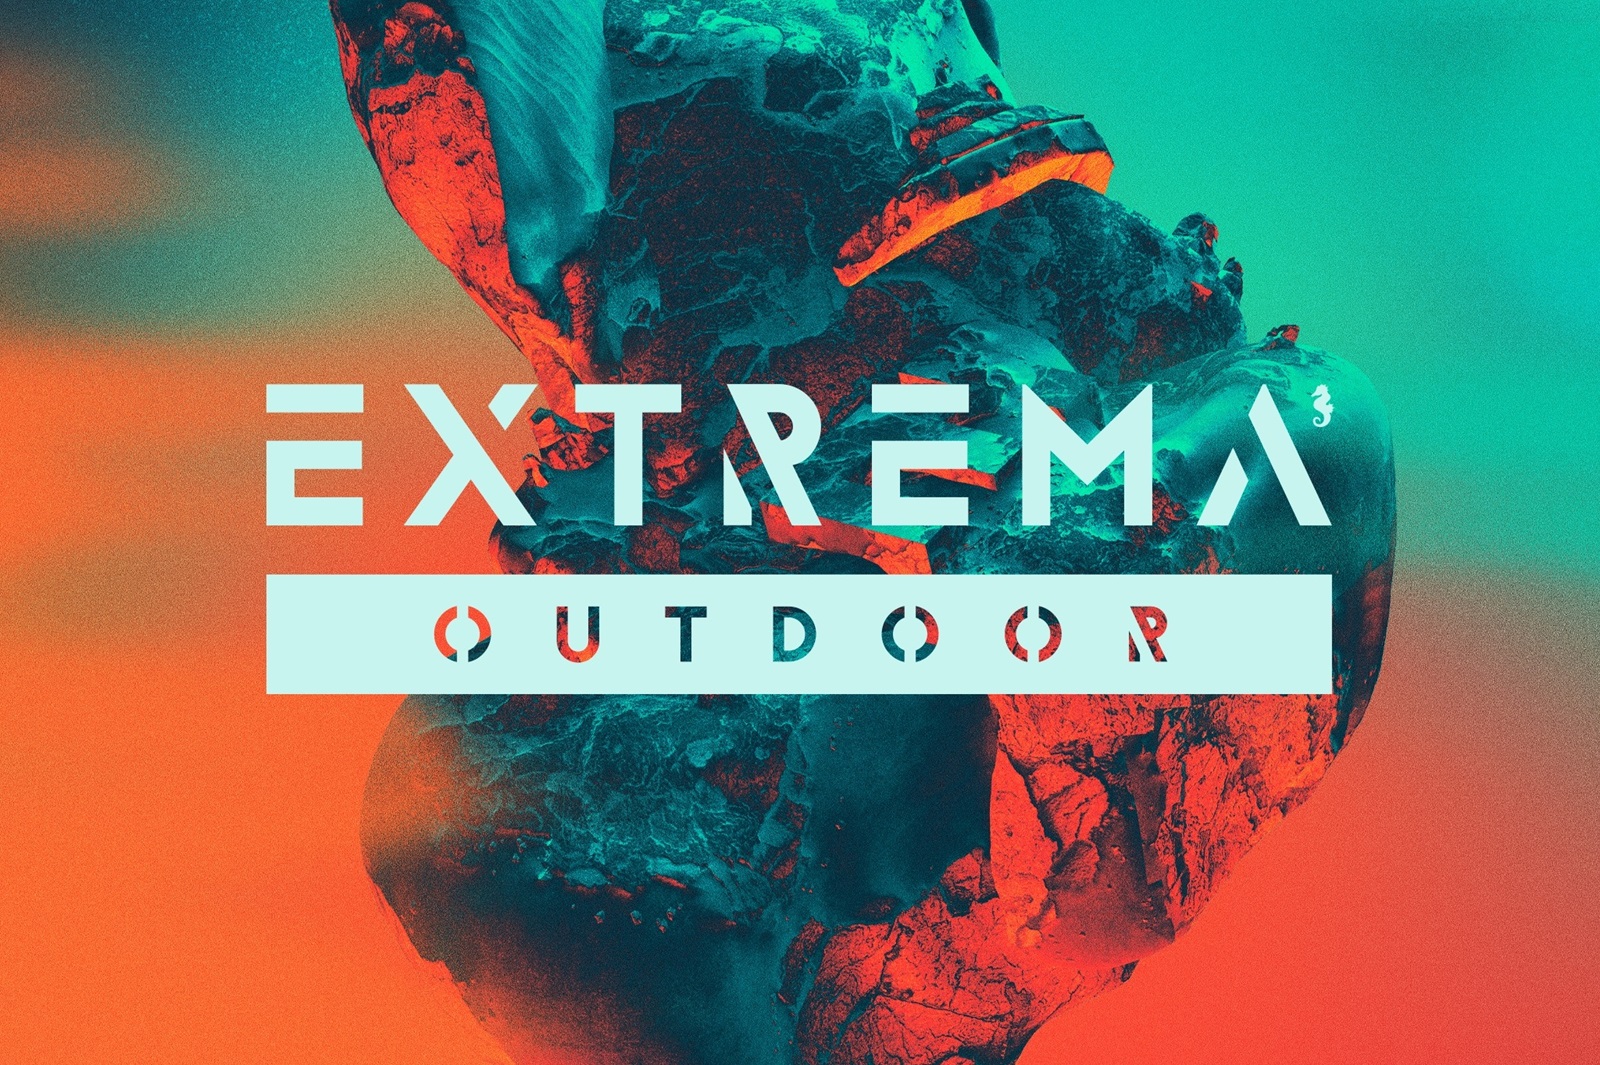 Extrema Outdoor